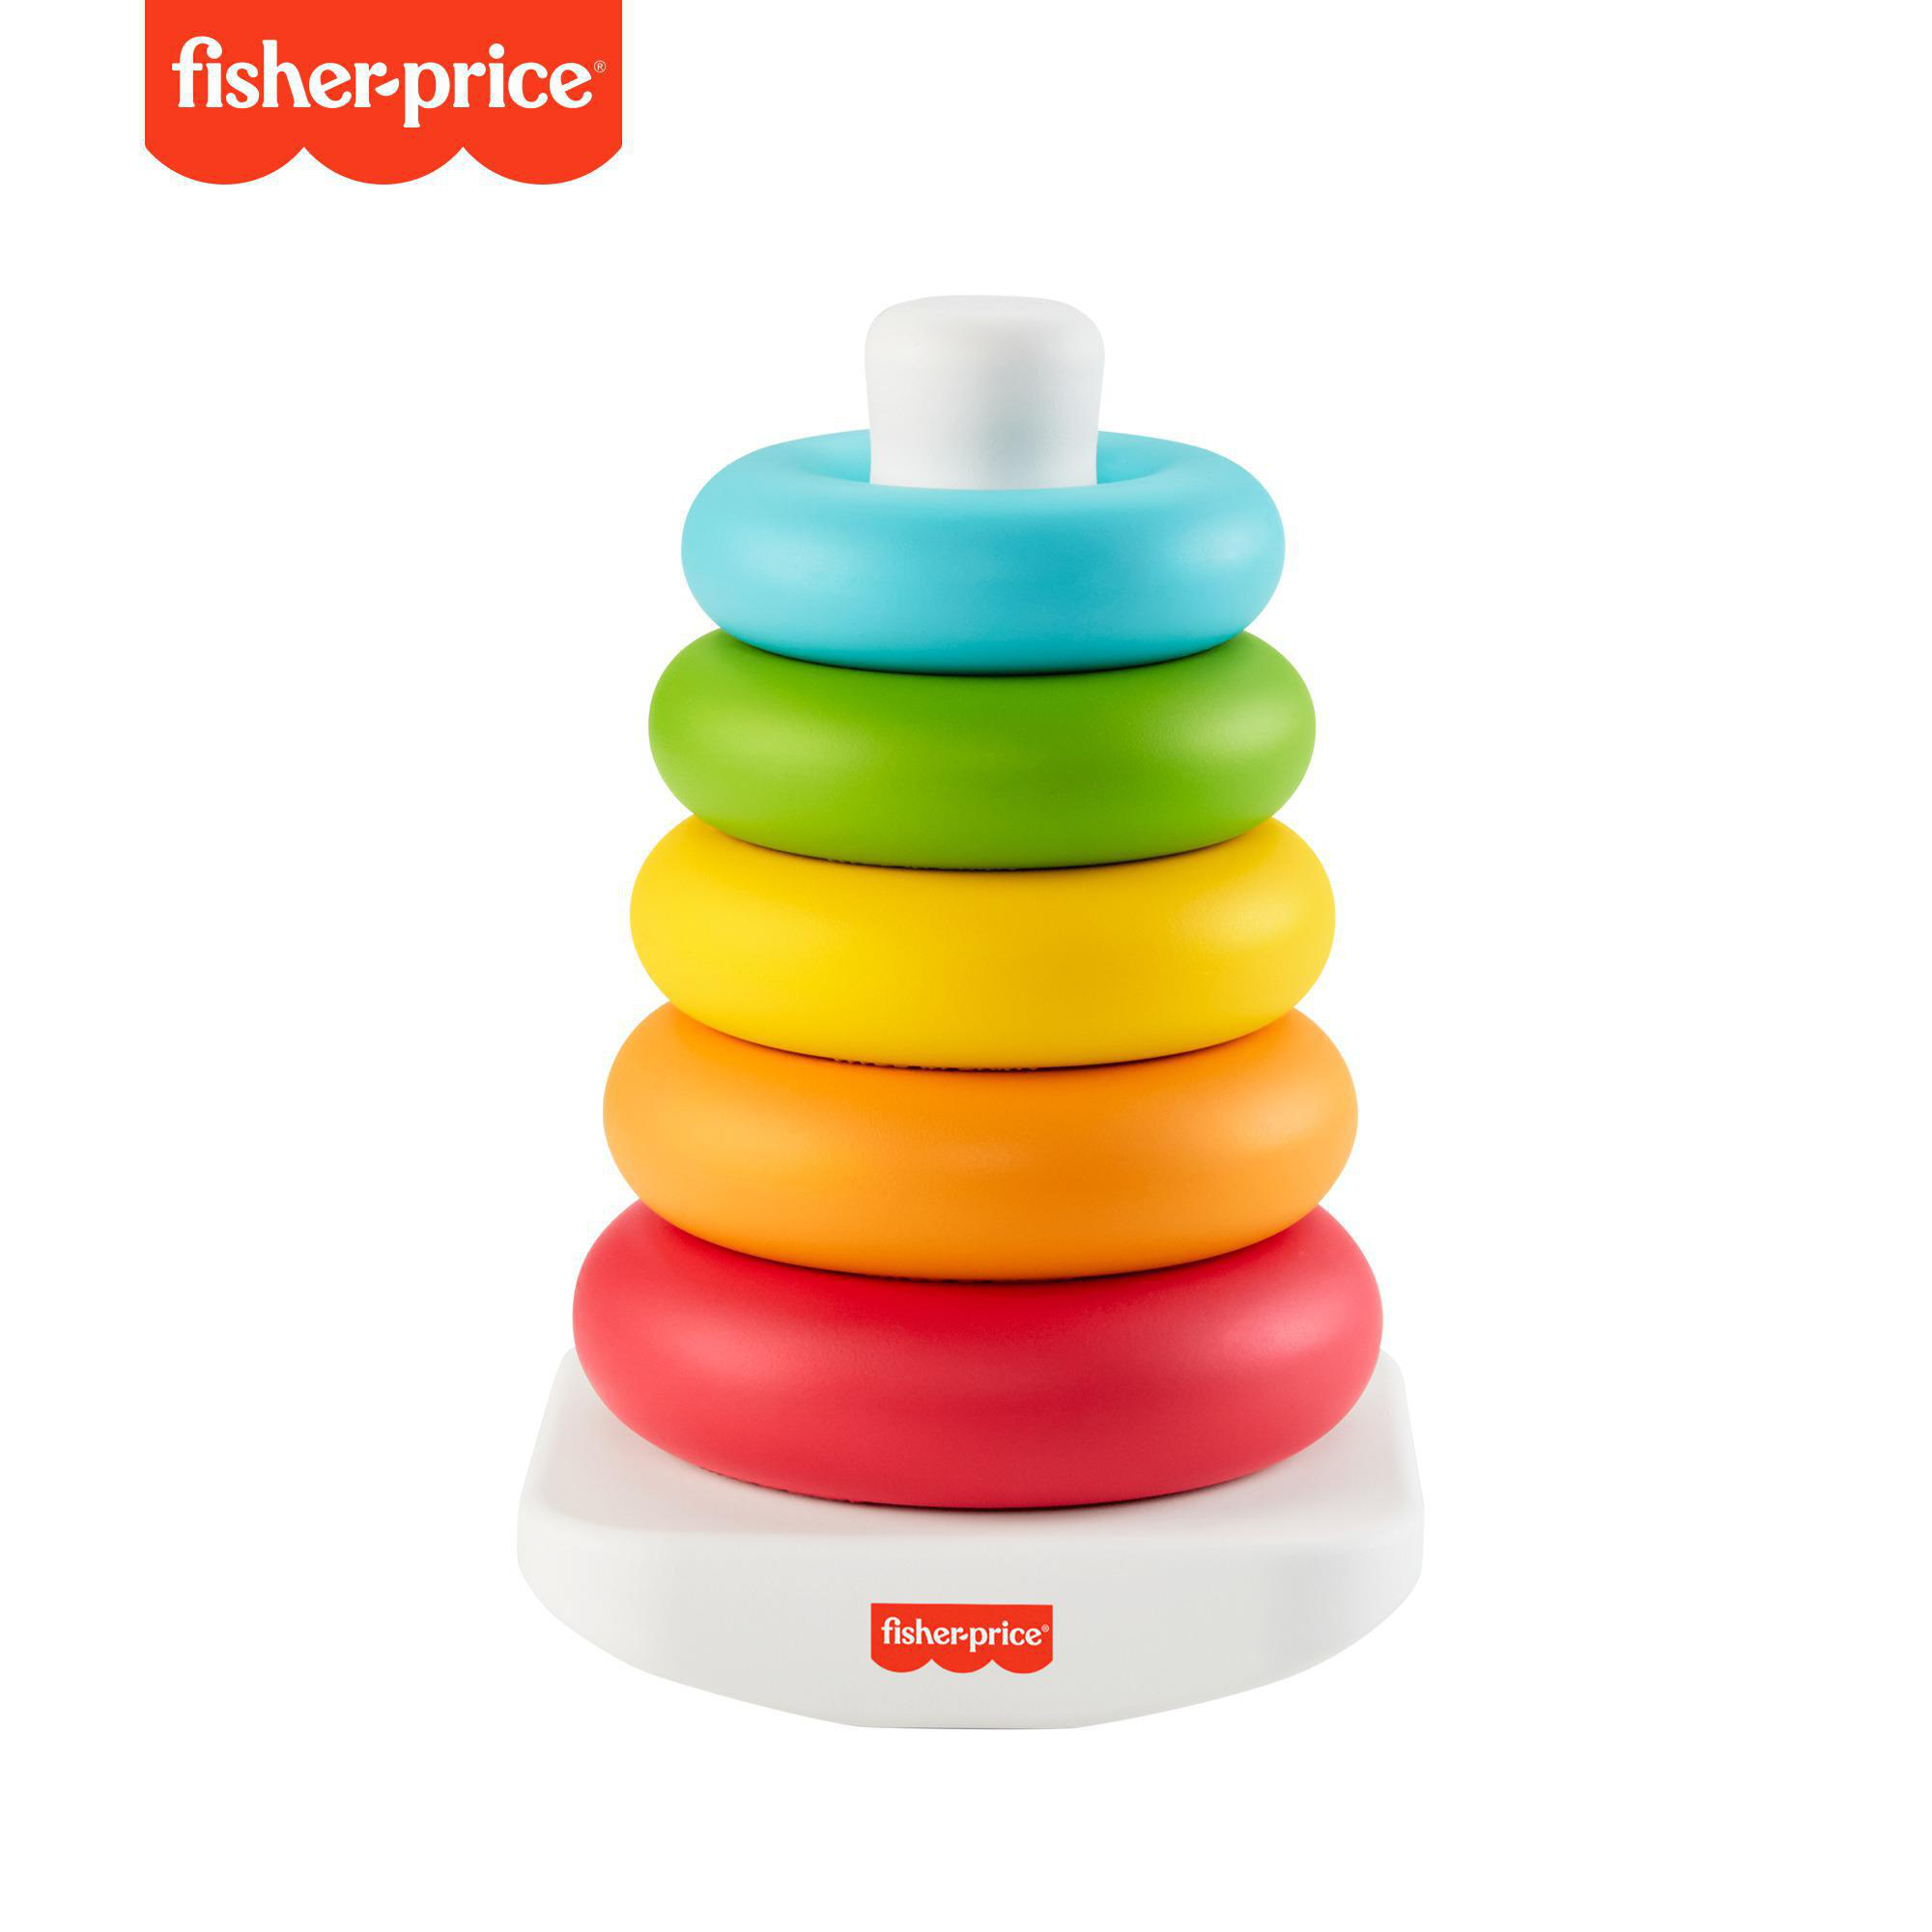 Babyspielset FISHER Bio-Kunststoff PRICE Eco Mehrfarbig 100% Pyramide, Stapelspiel, Farbring